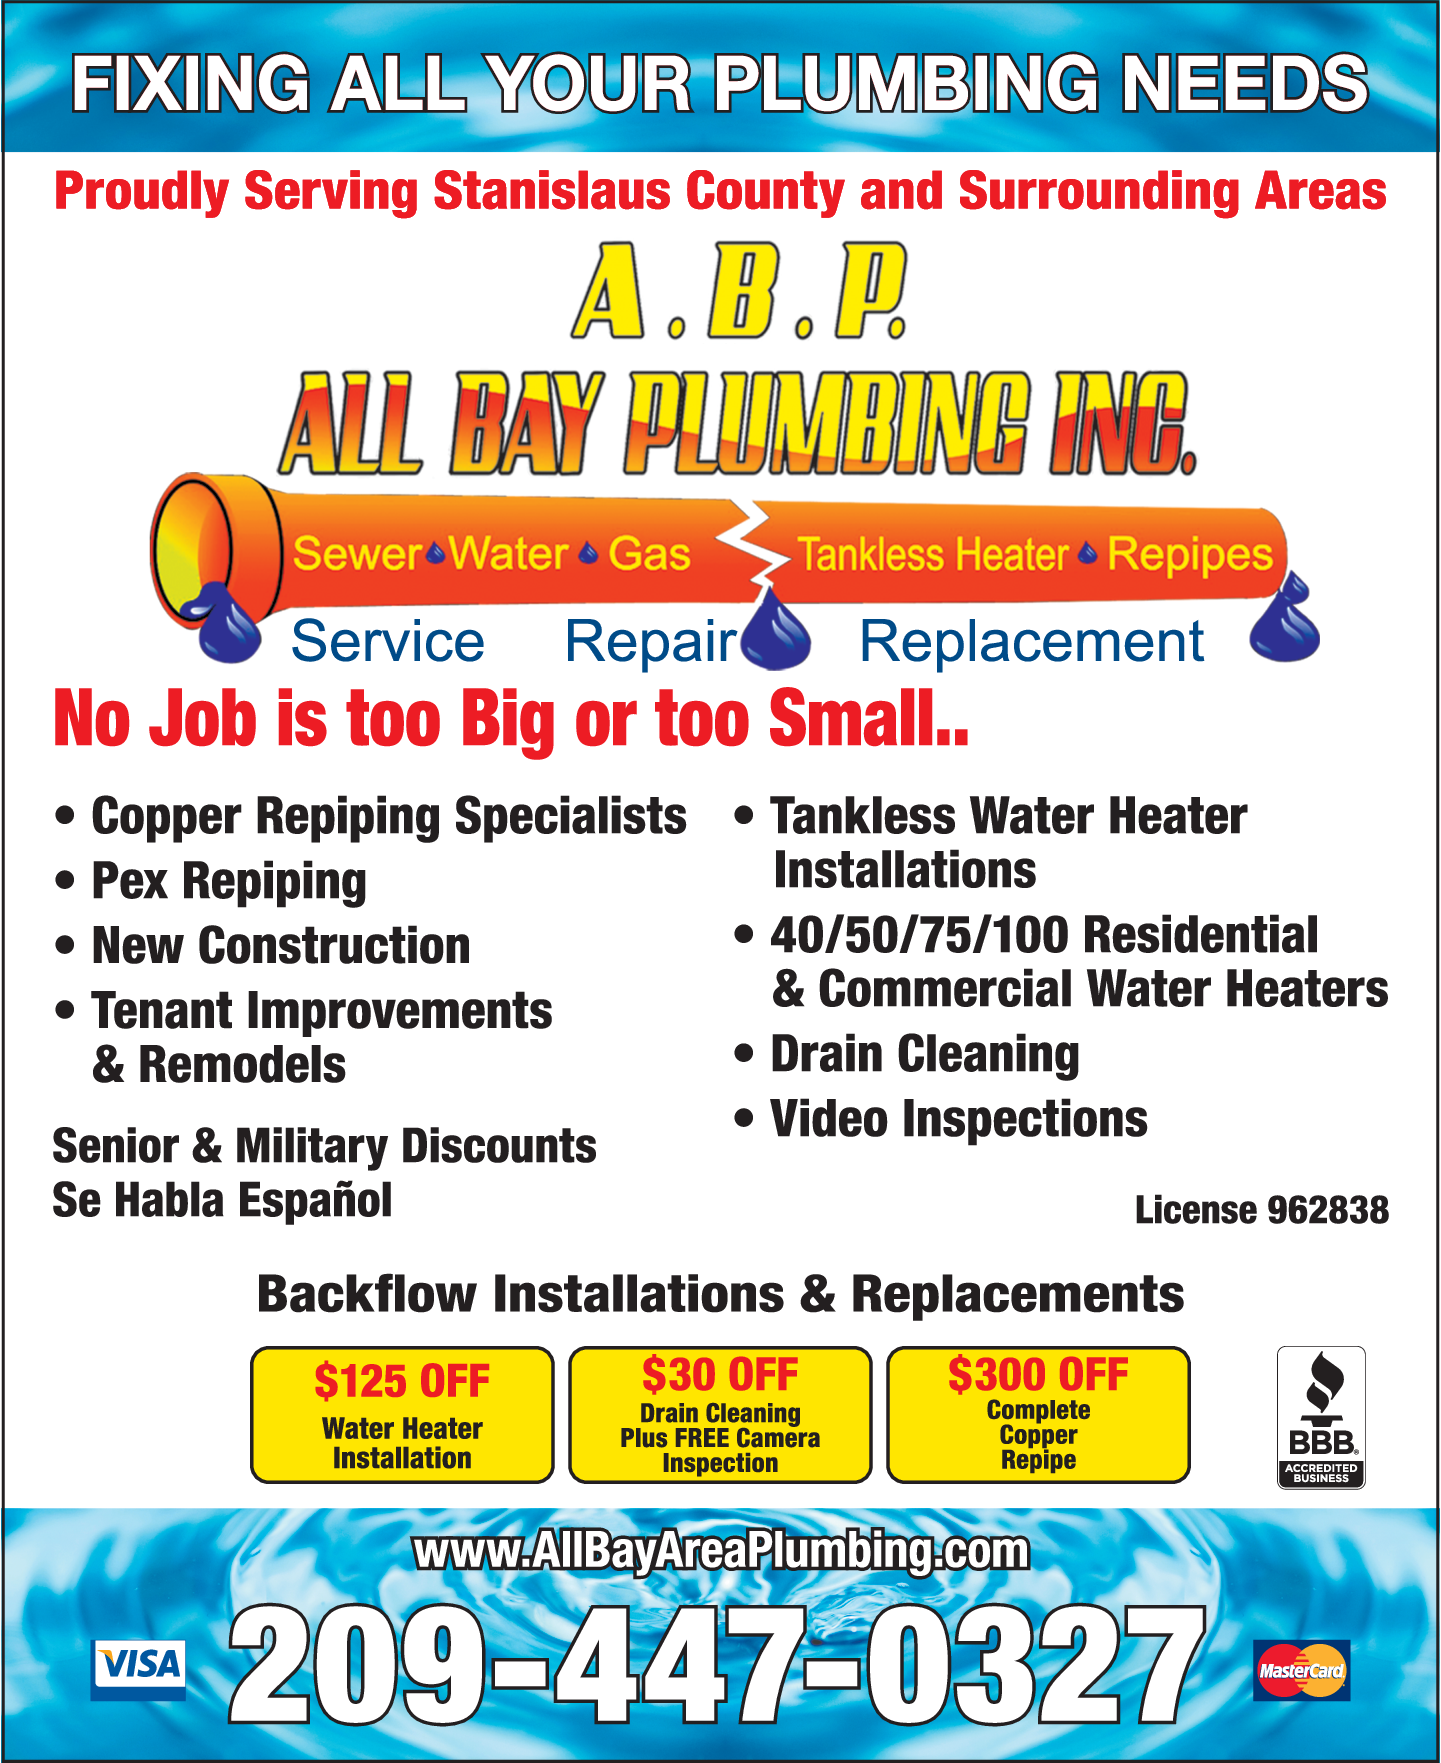 ABP All Bay Plumbing Inc